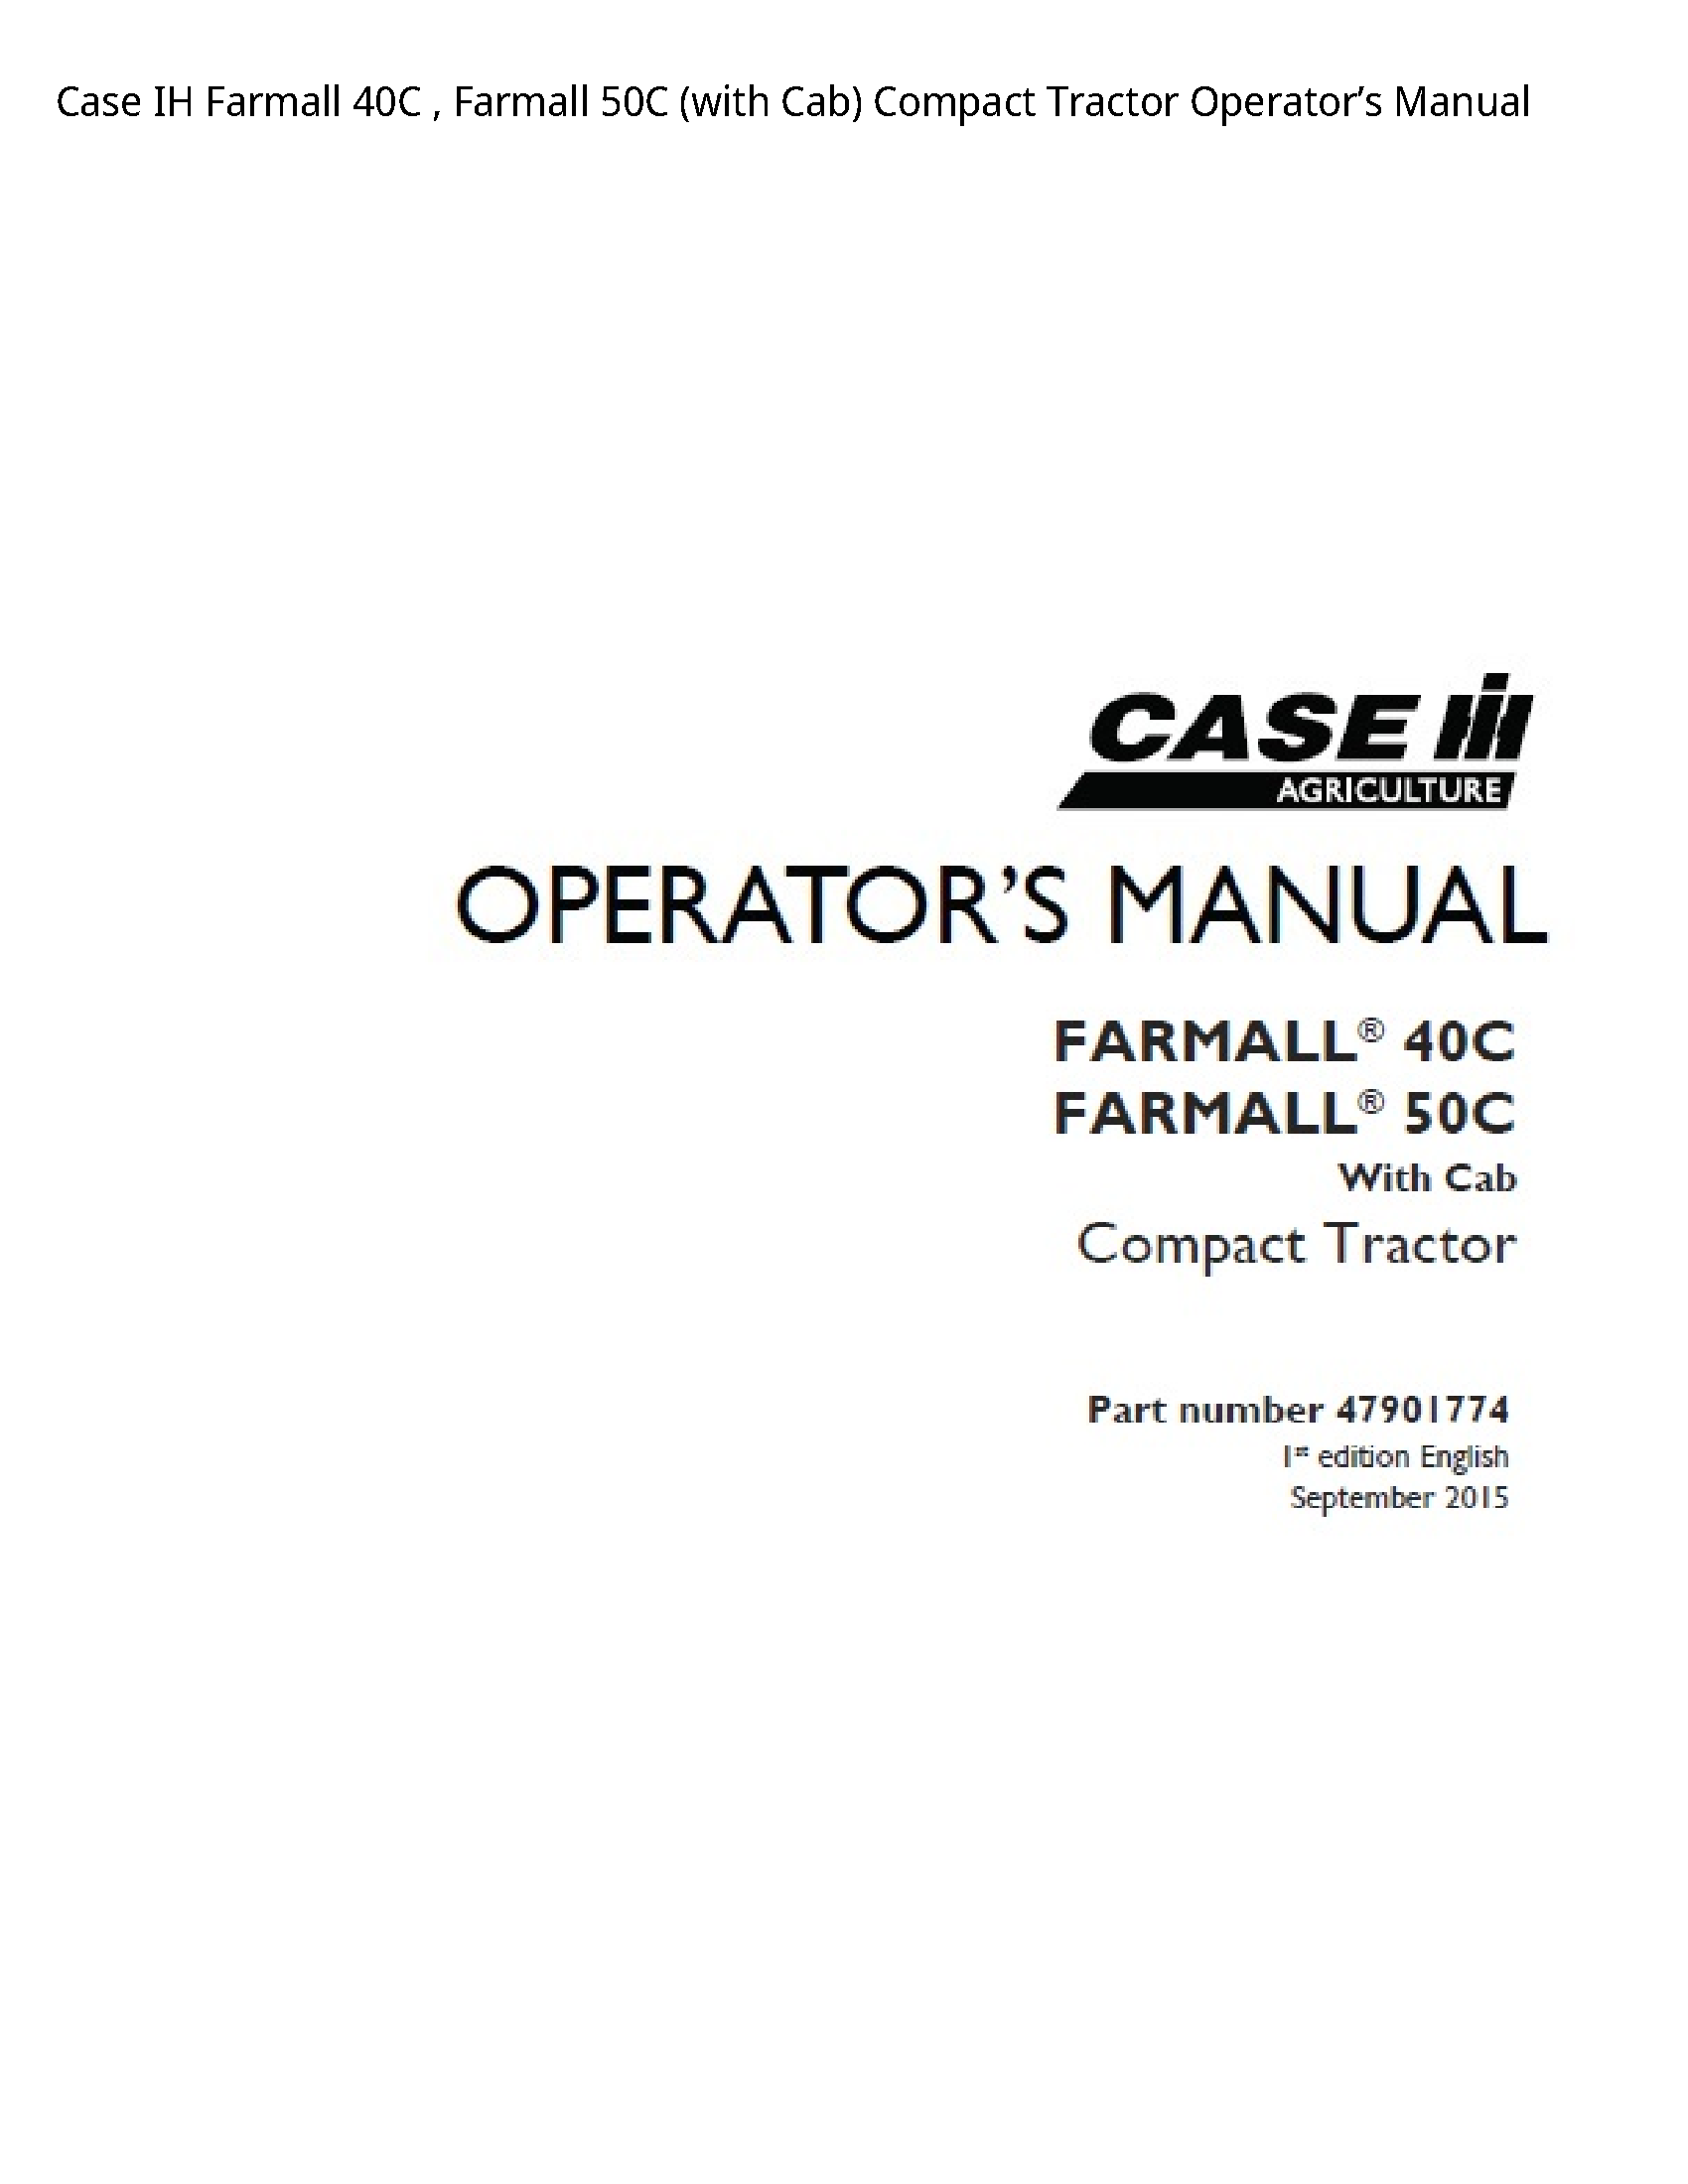 Case/Case IH 40C IH Farmall Farmall (with Cab) Compact Tractor Operator’s manual